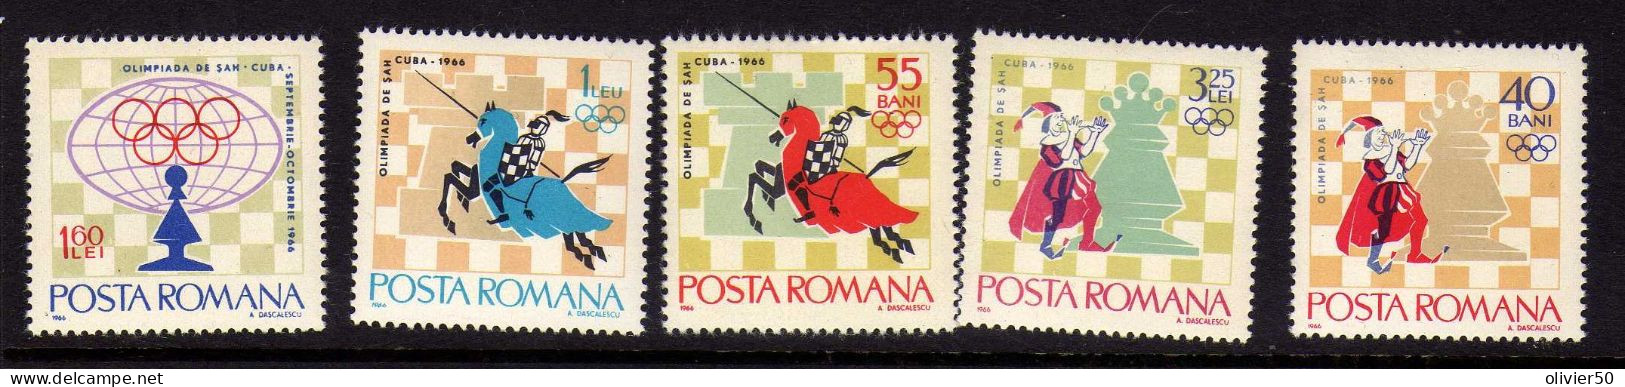 Roumanie - 1966  -  Tournois International D'Echecs - Cuba - La Havane -Neufs** - MNH  - - Ungebraucht